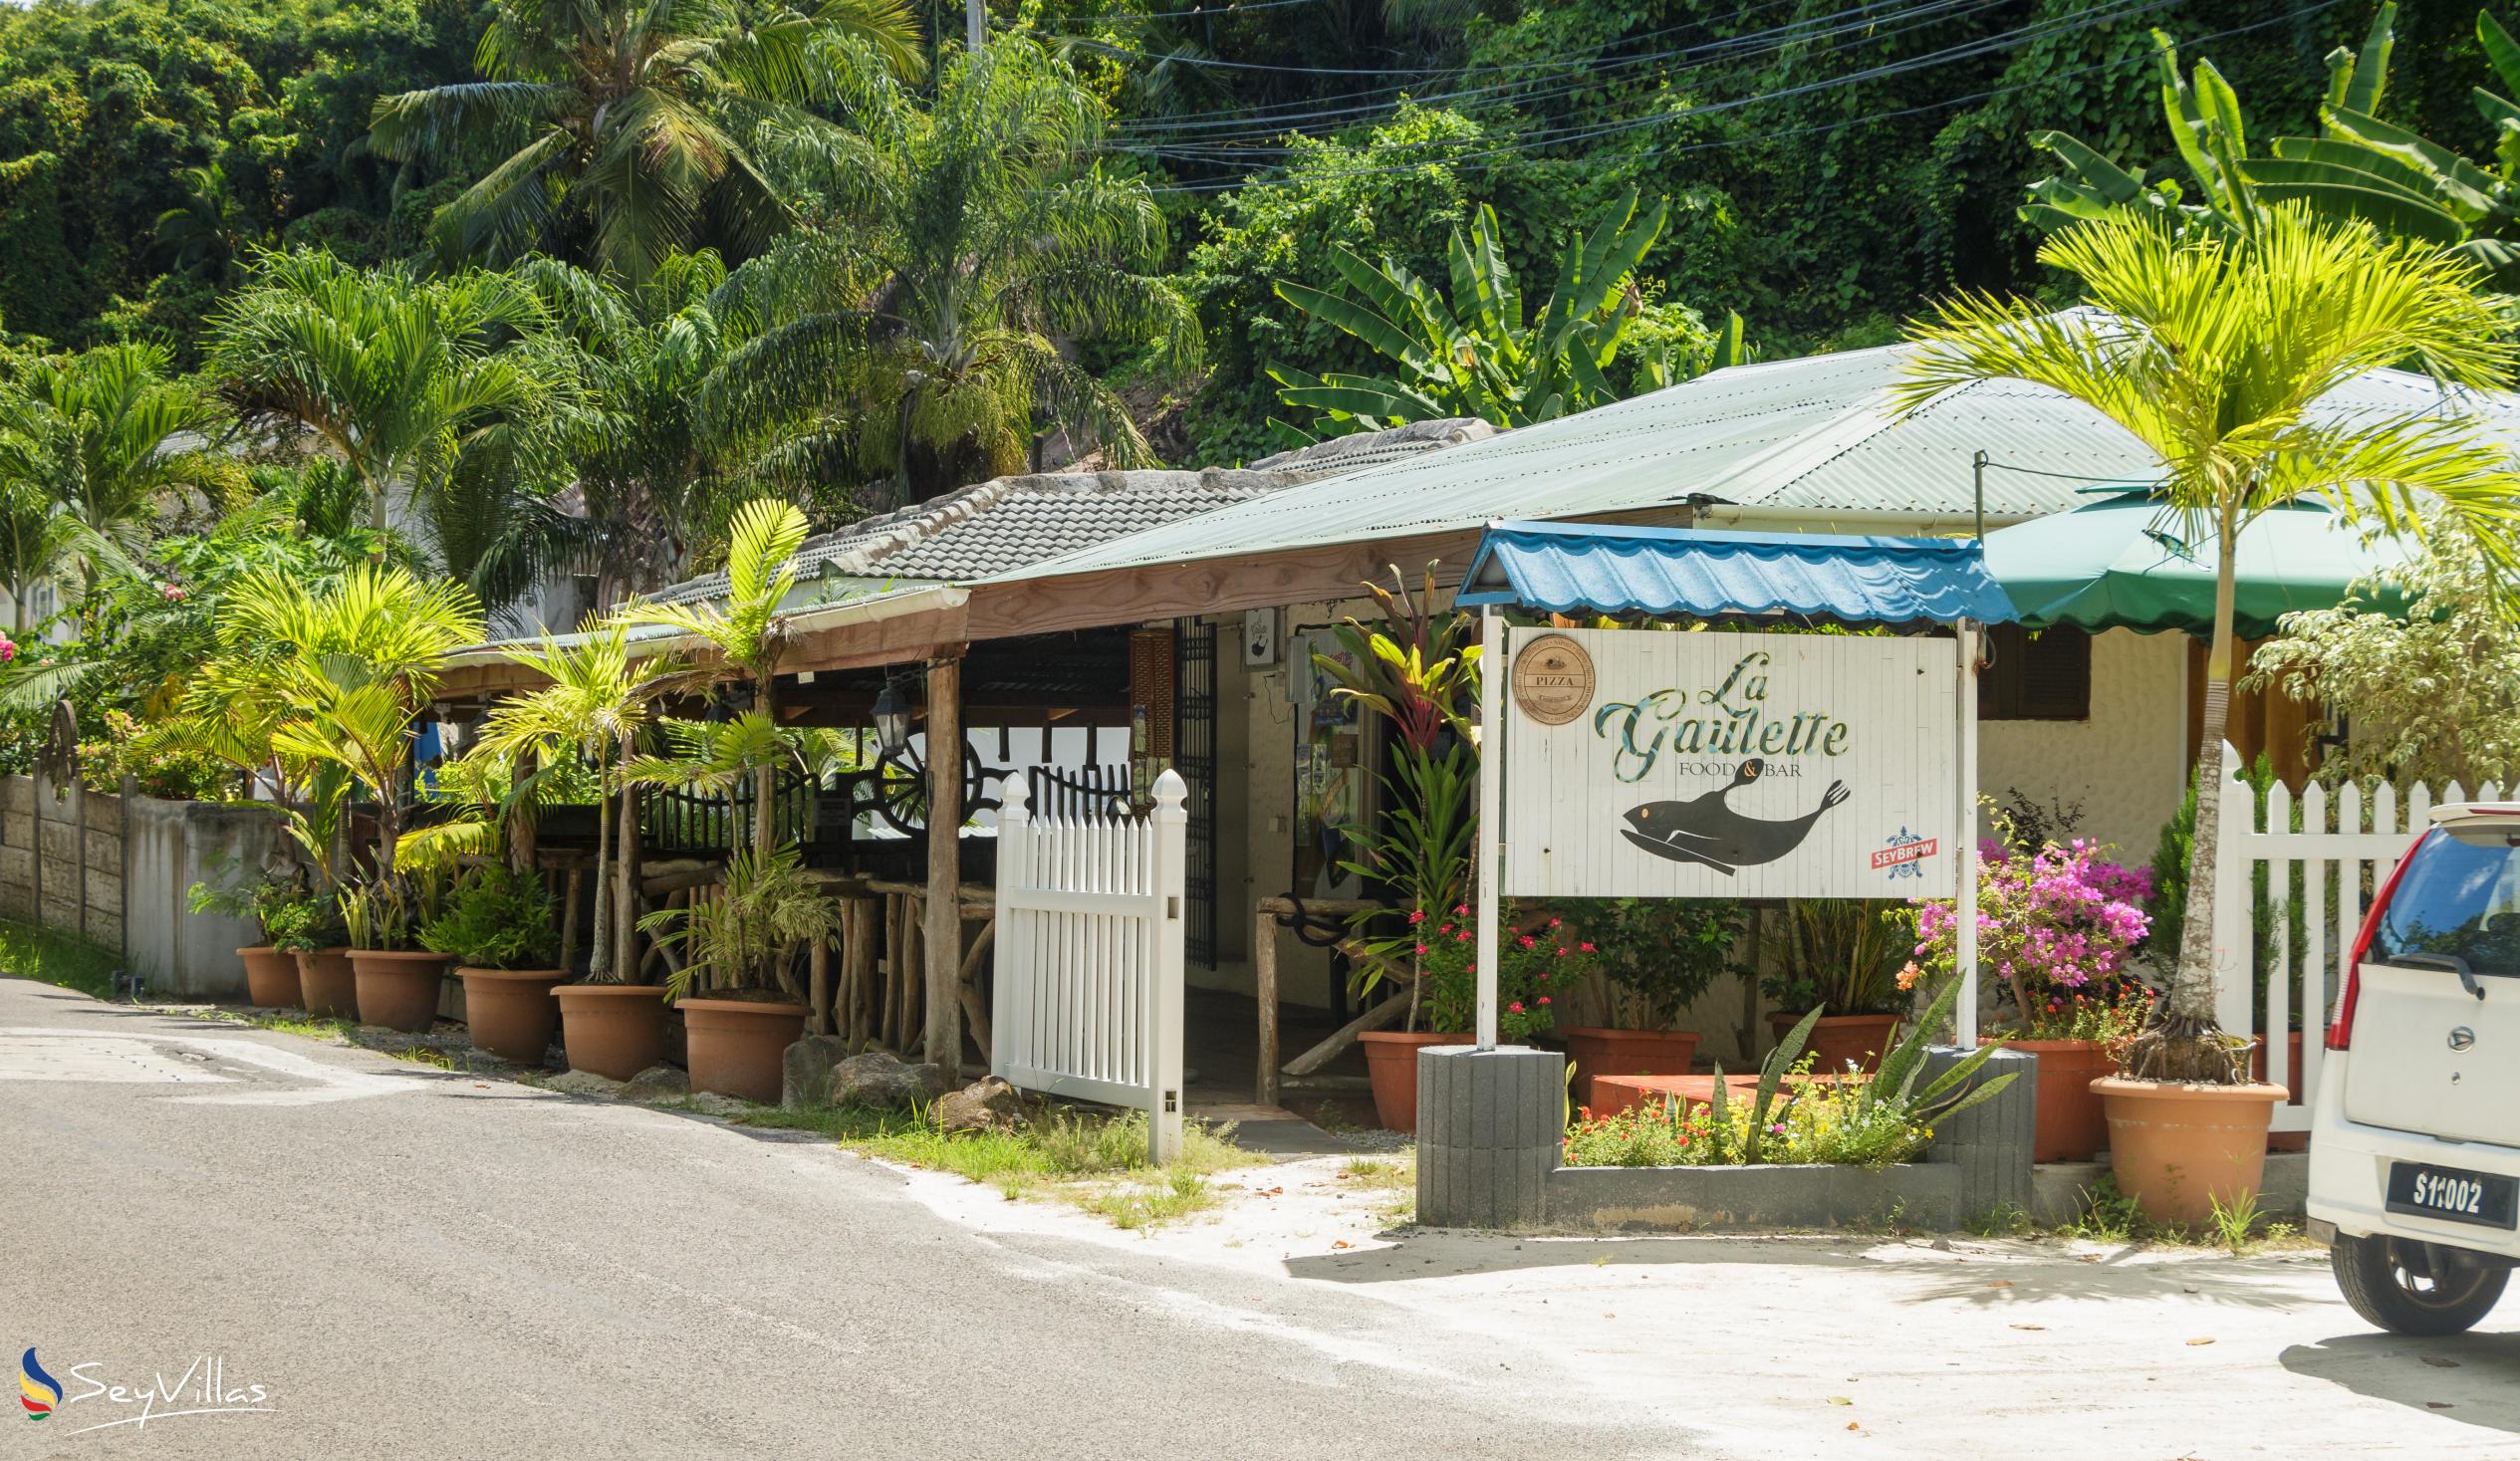 Foto 58: Lazare Picault Hotel - Location - Mahé (Seychelles)